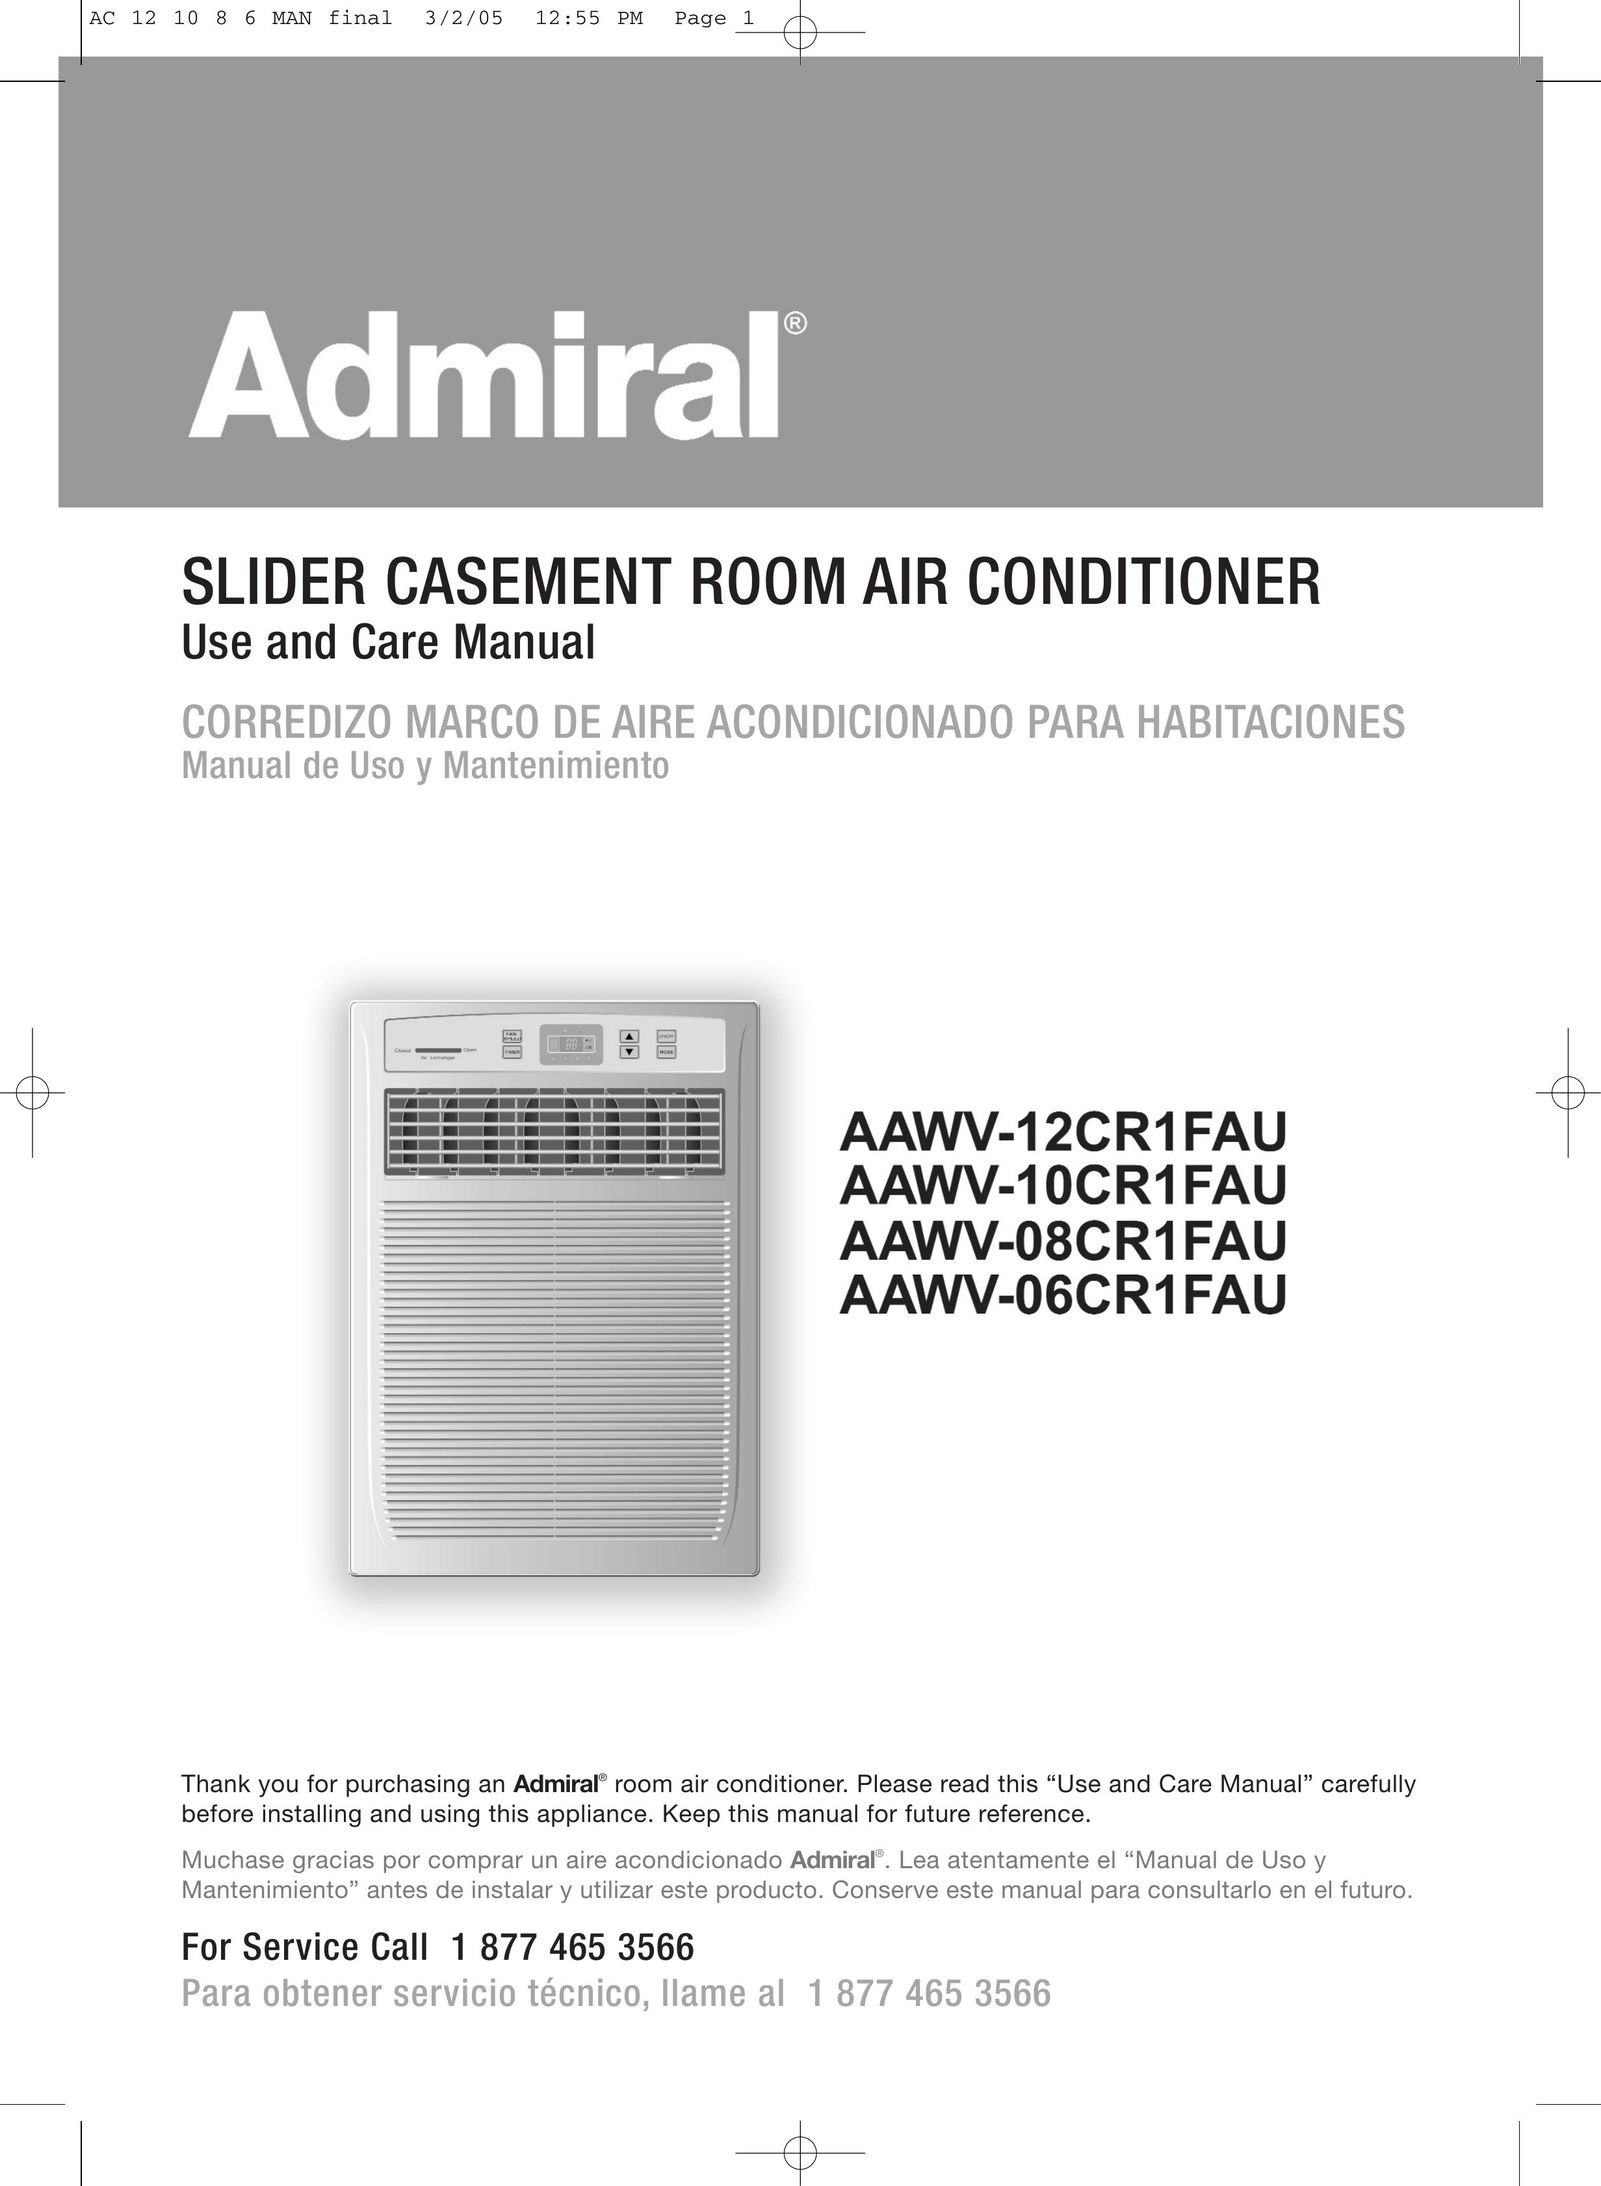 Admiral AAWV-12CR1FAU Air Conditioner User Manual